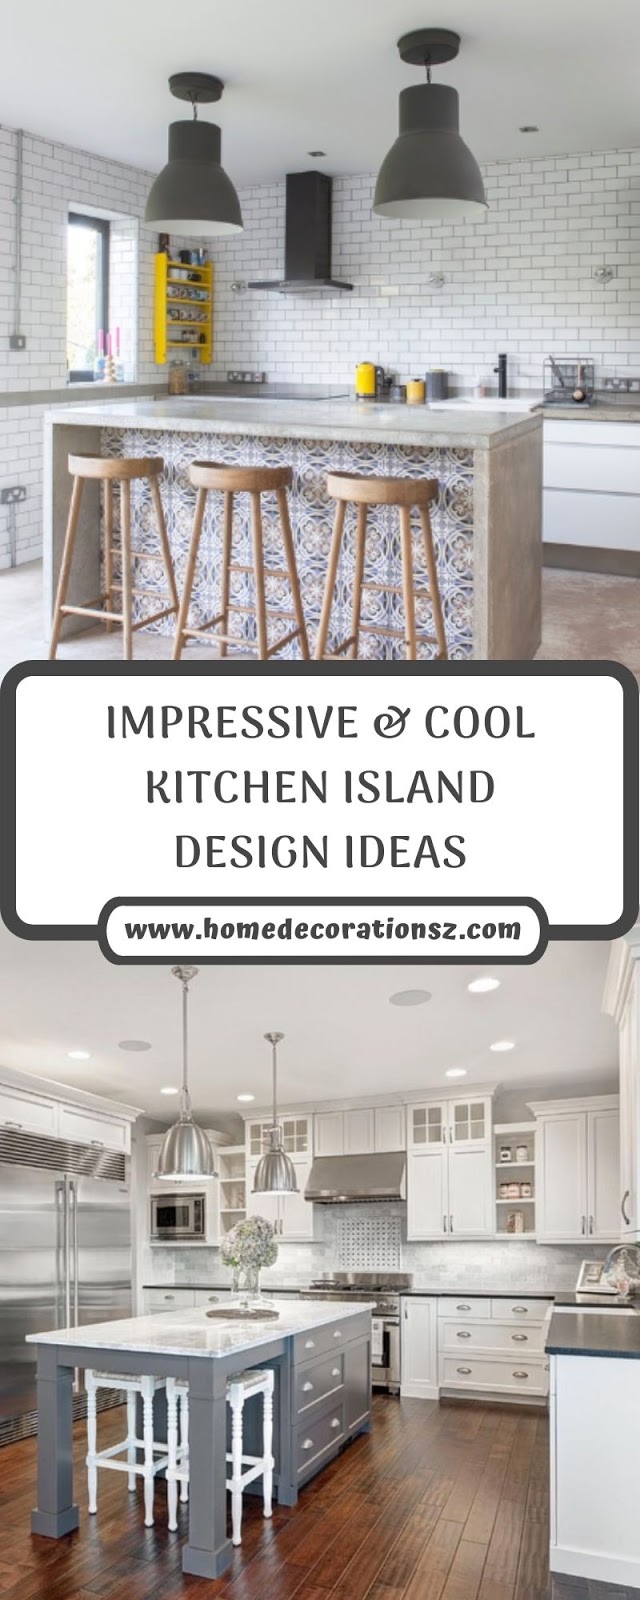 IMPRESSIVE & COOL KITCHEN ISLAND DESIGN IDEAS